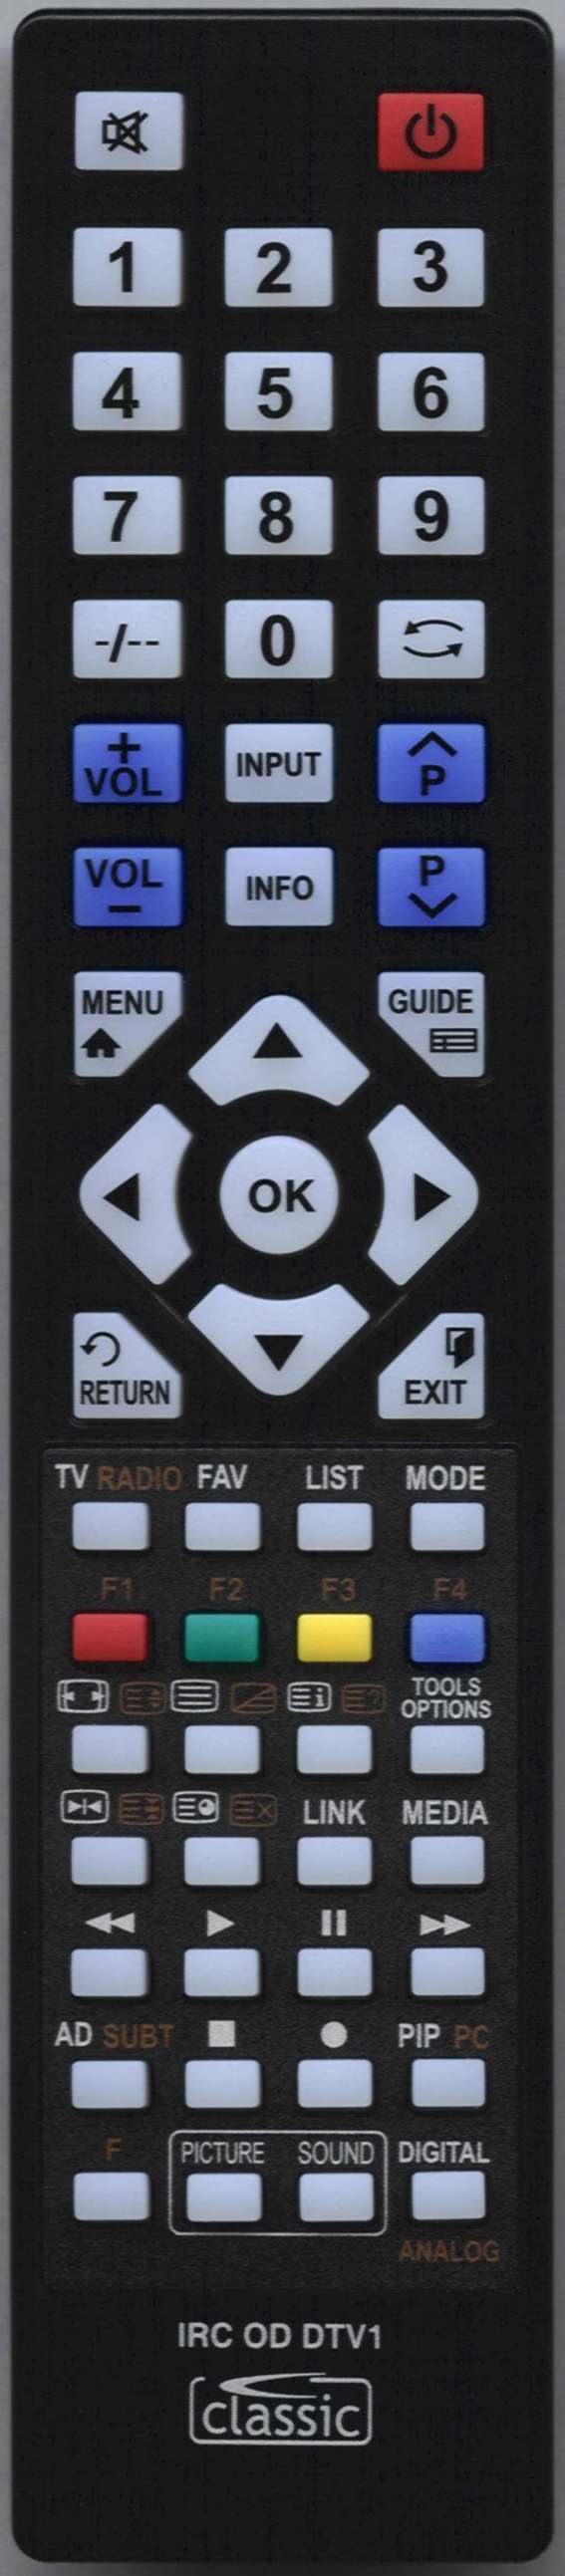 TCL RC1994925 Remote Control Alternative